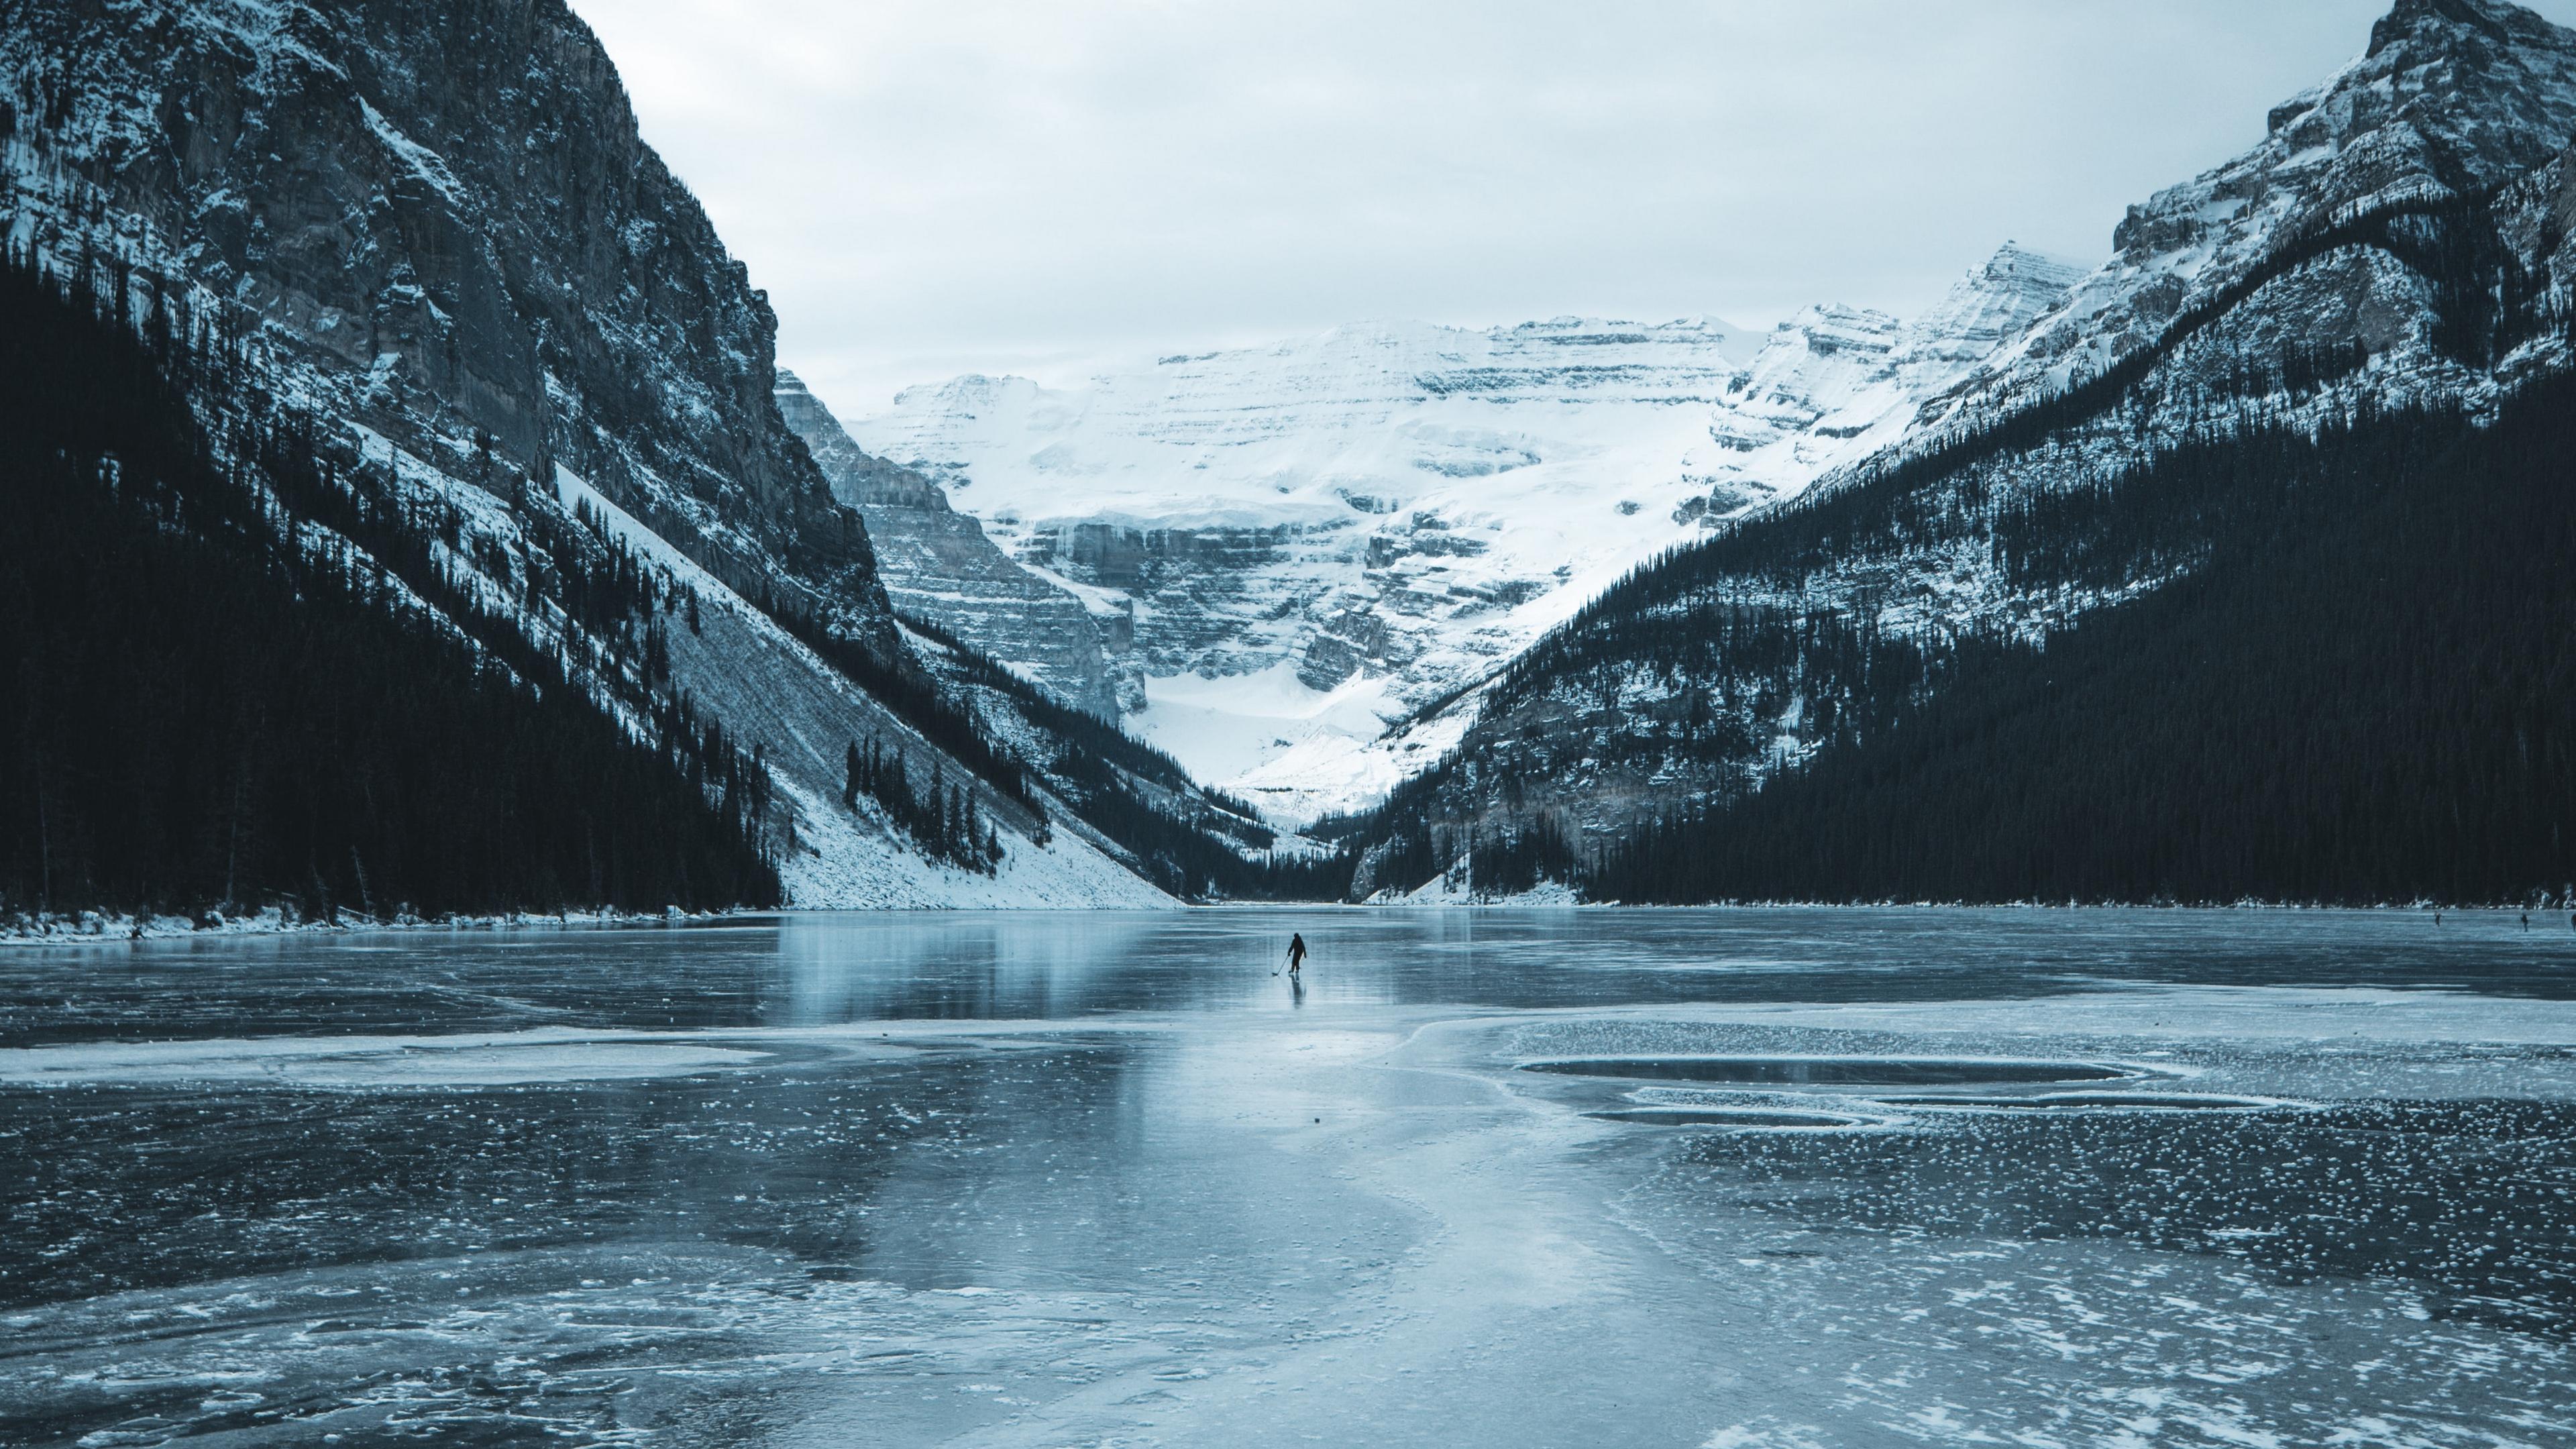 Download wallpaper 3840x2160 lake, mountains, ice, frozen, snow